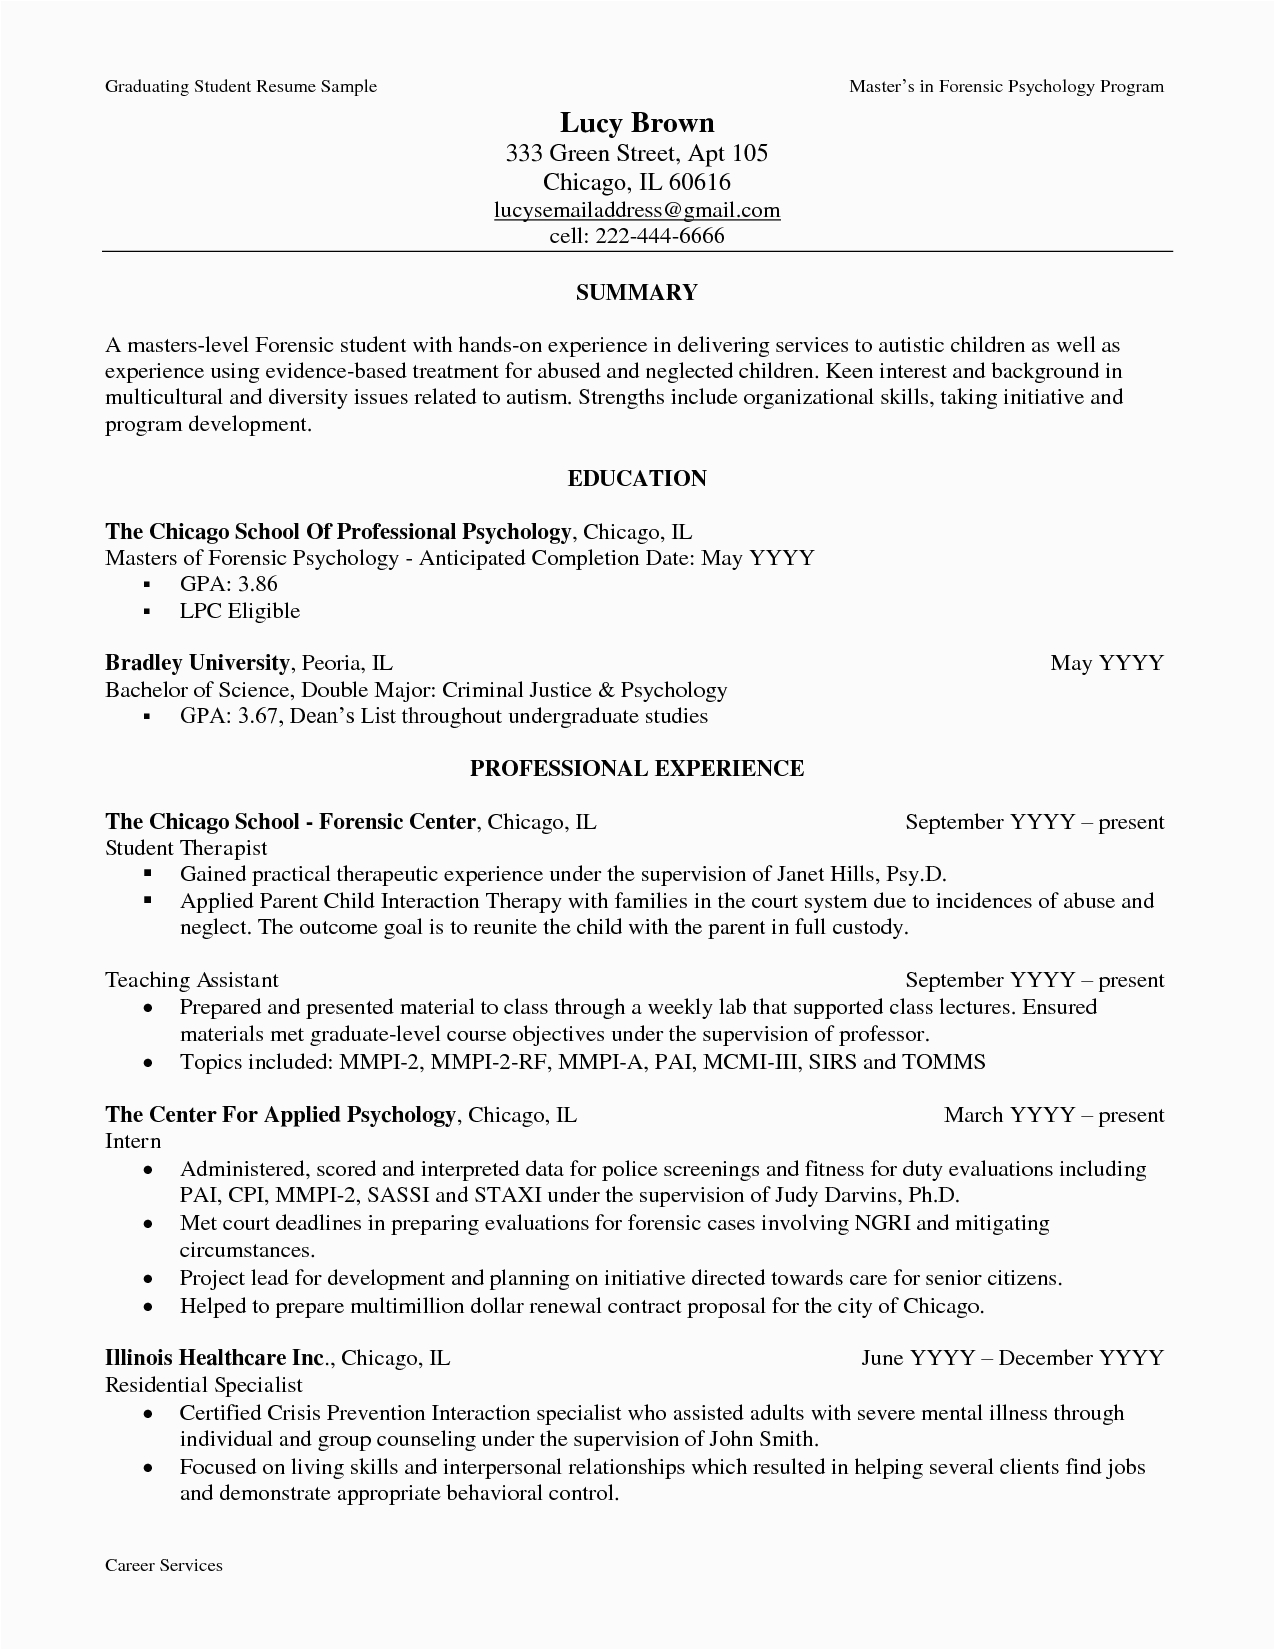 Sample Resume for Freshers In Psychology Resume Summary Examples for Fresh Graduate Karoosha